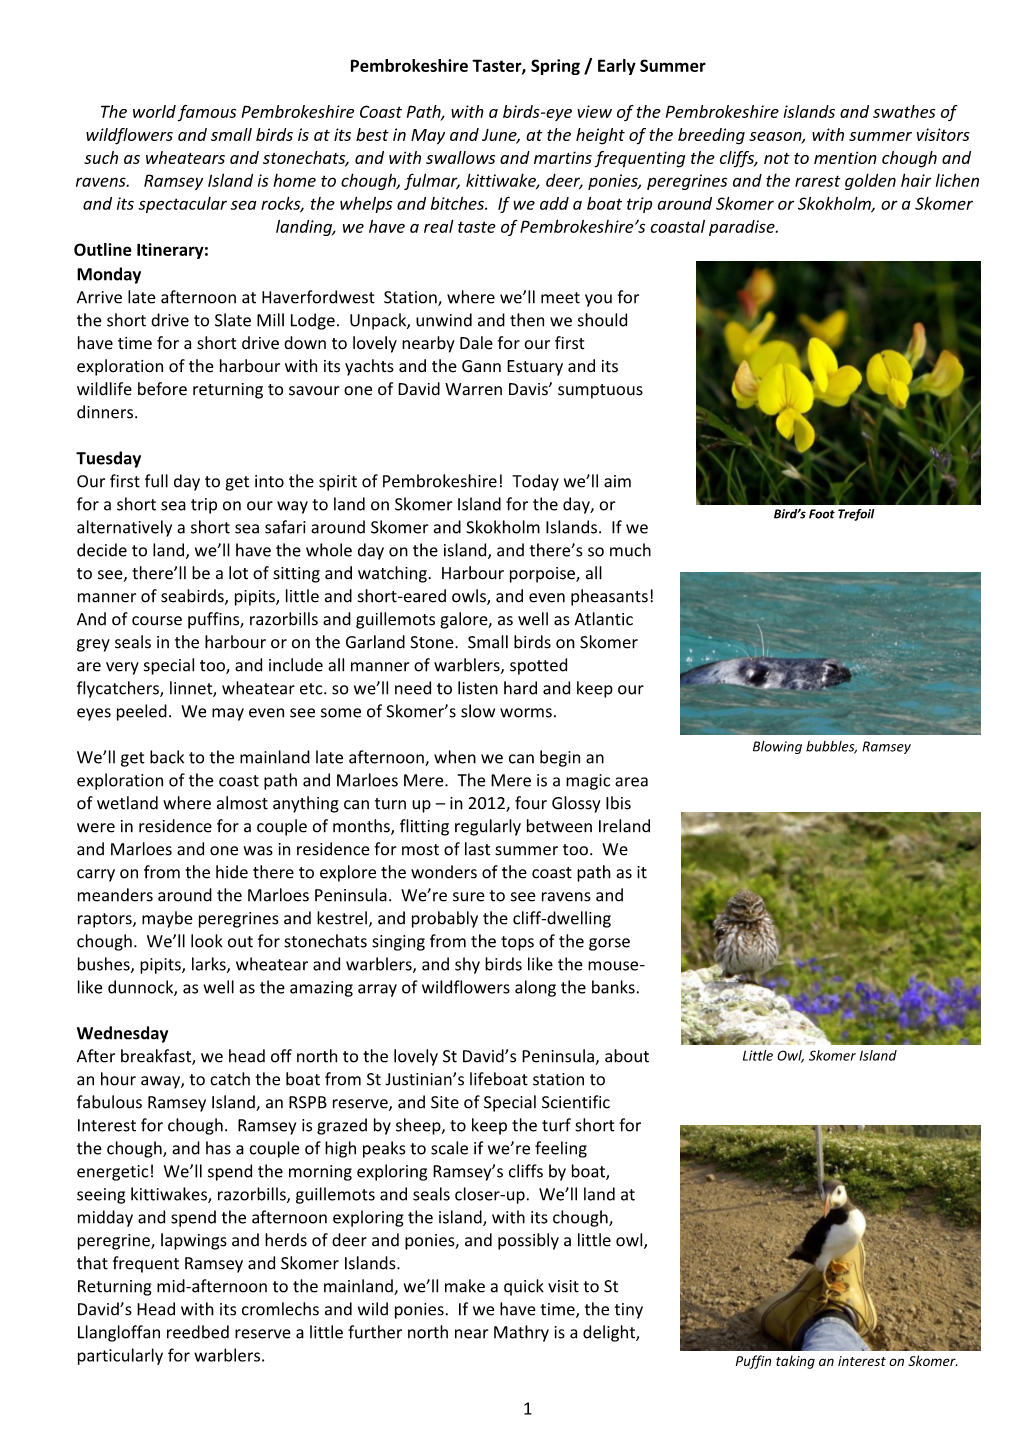 Pembrokeshire Spring Safari